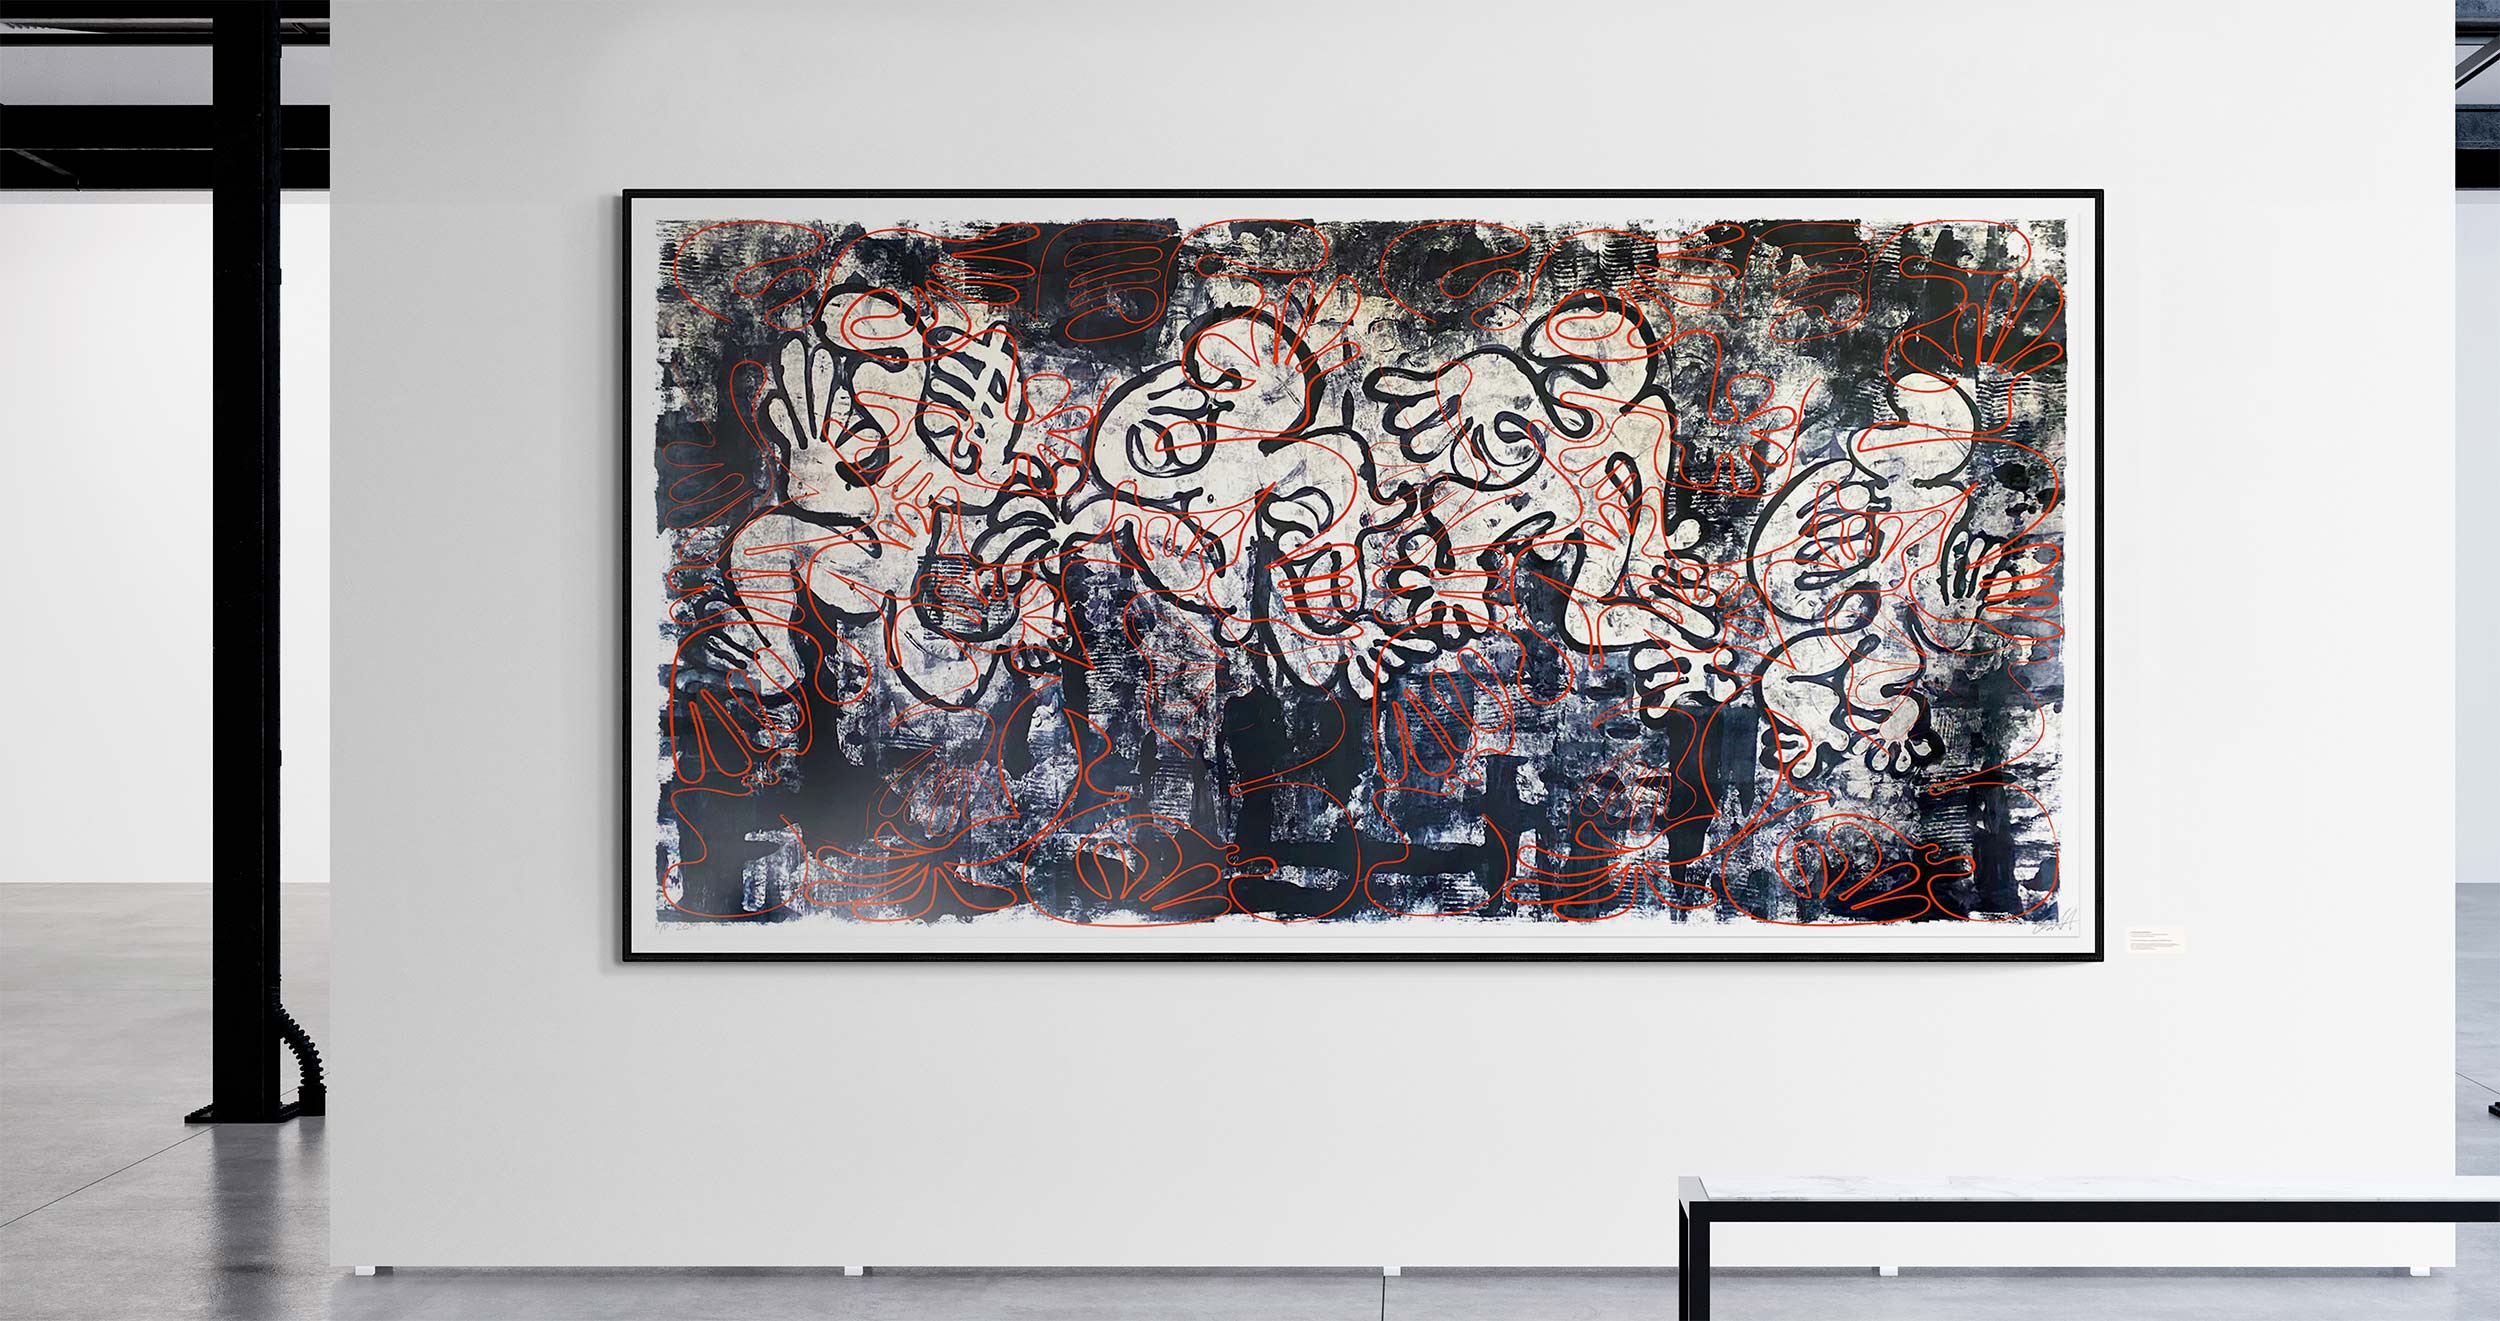 Robert Santoré "KAVA GHOSTS" 83 x 41in (210.82 x 104.14cm) Hand painted mono-print on 100% acid free cotton rag